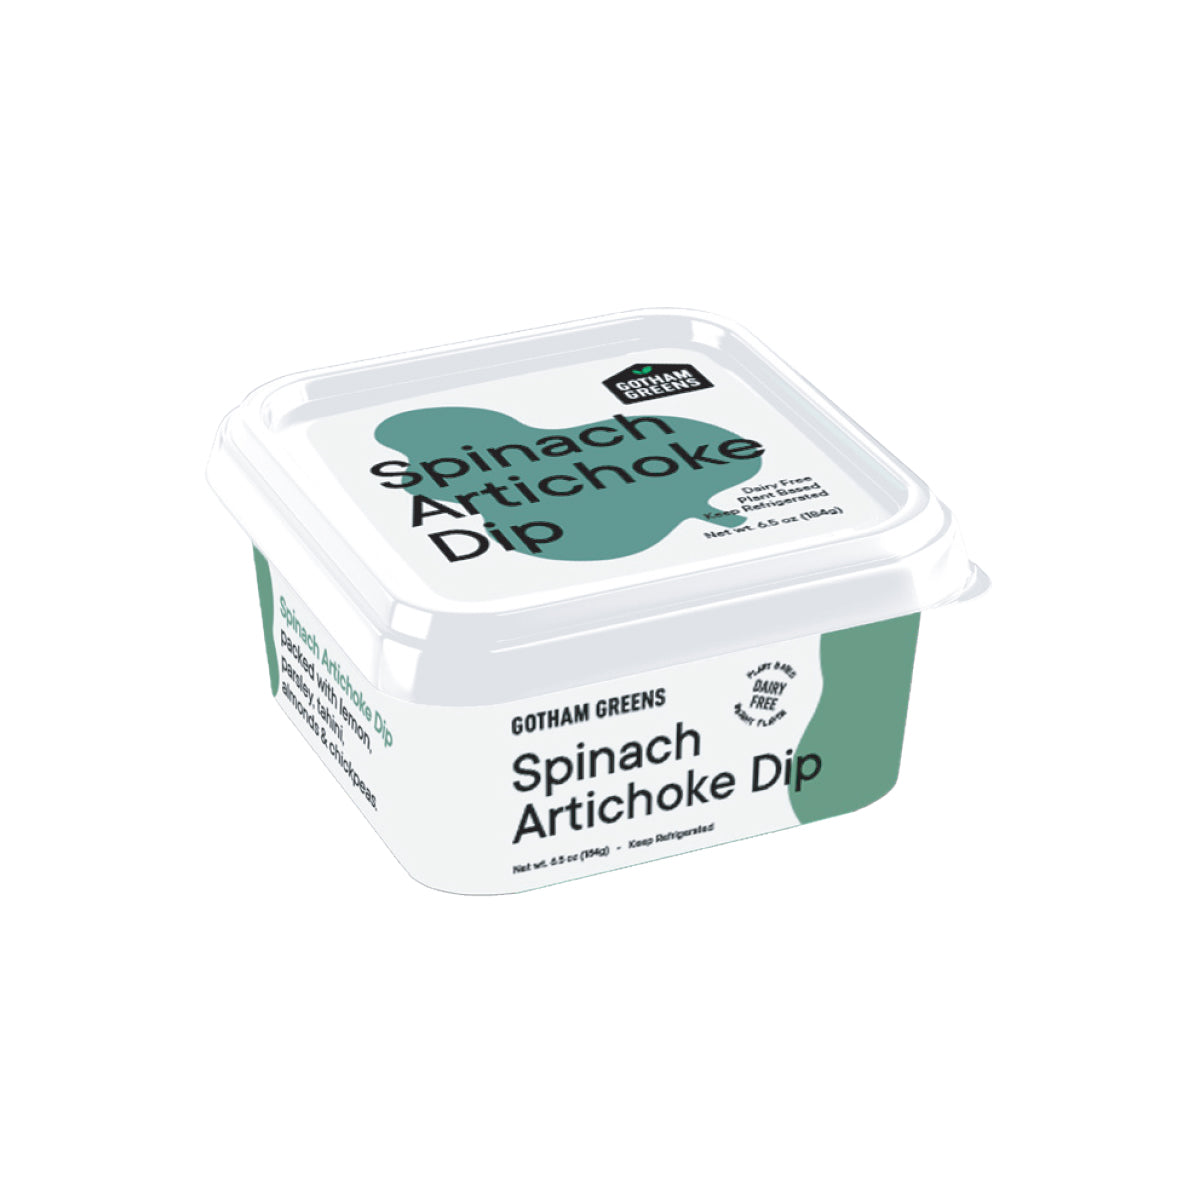 Gotham Greens Spinach Artichoke Dip 6.5 OZ